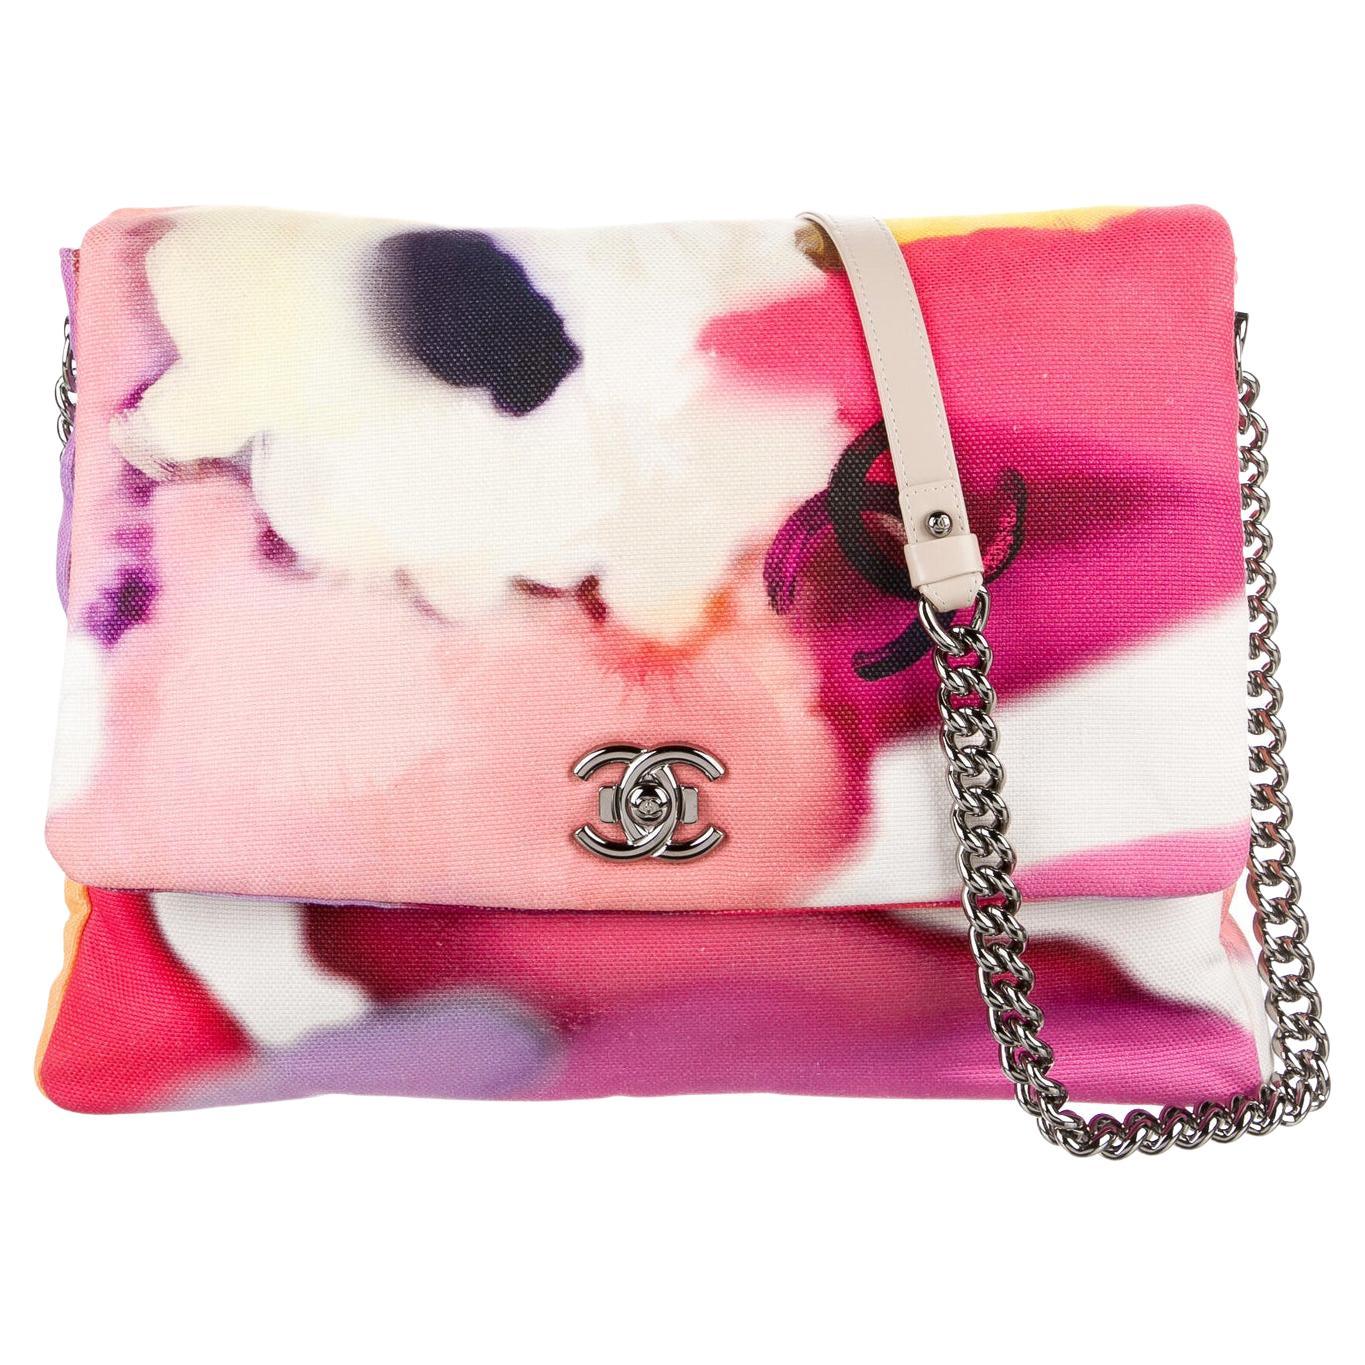 Chanel Rare Pink Tie Dye Graffiti Flower Paintbrush Large Maxi Shoulder Bag